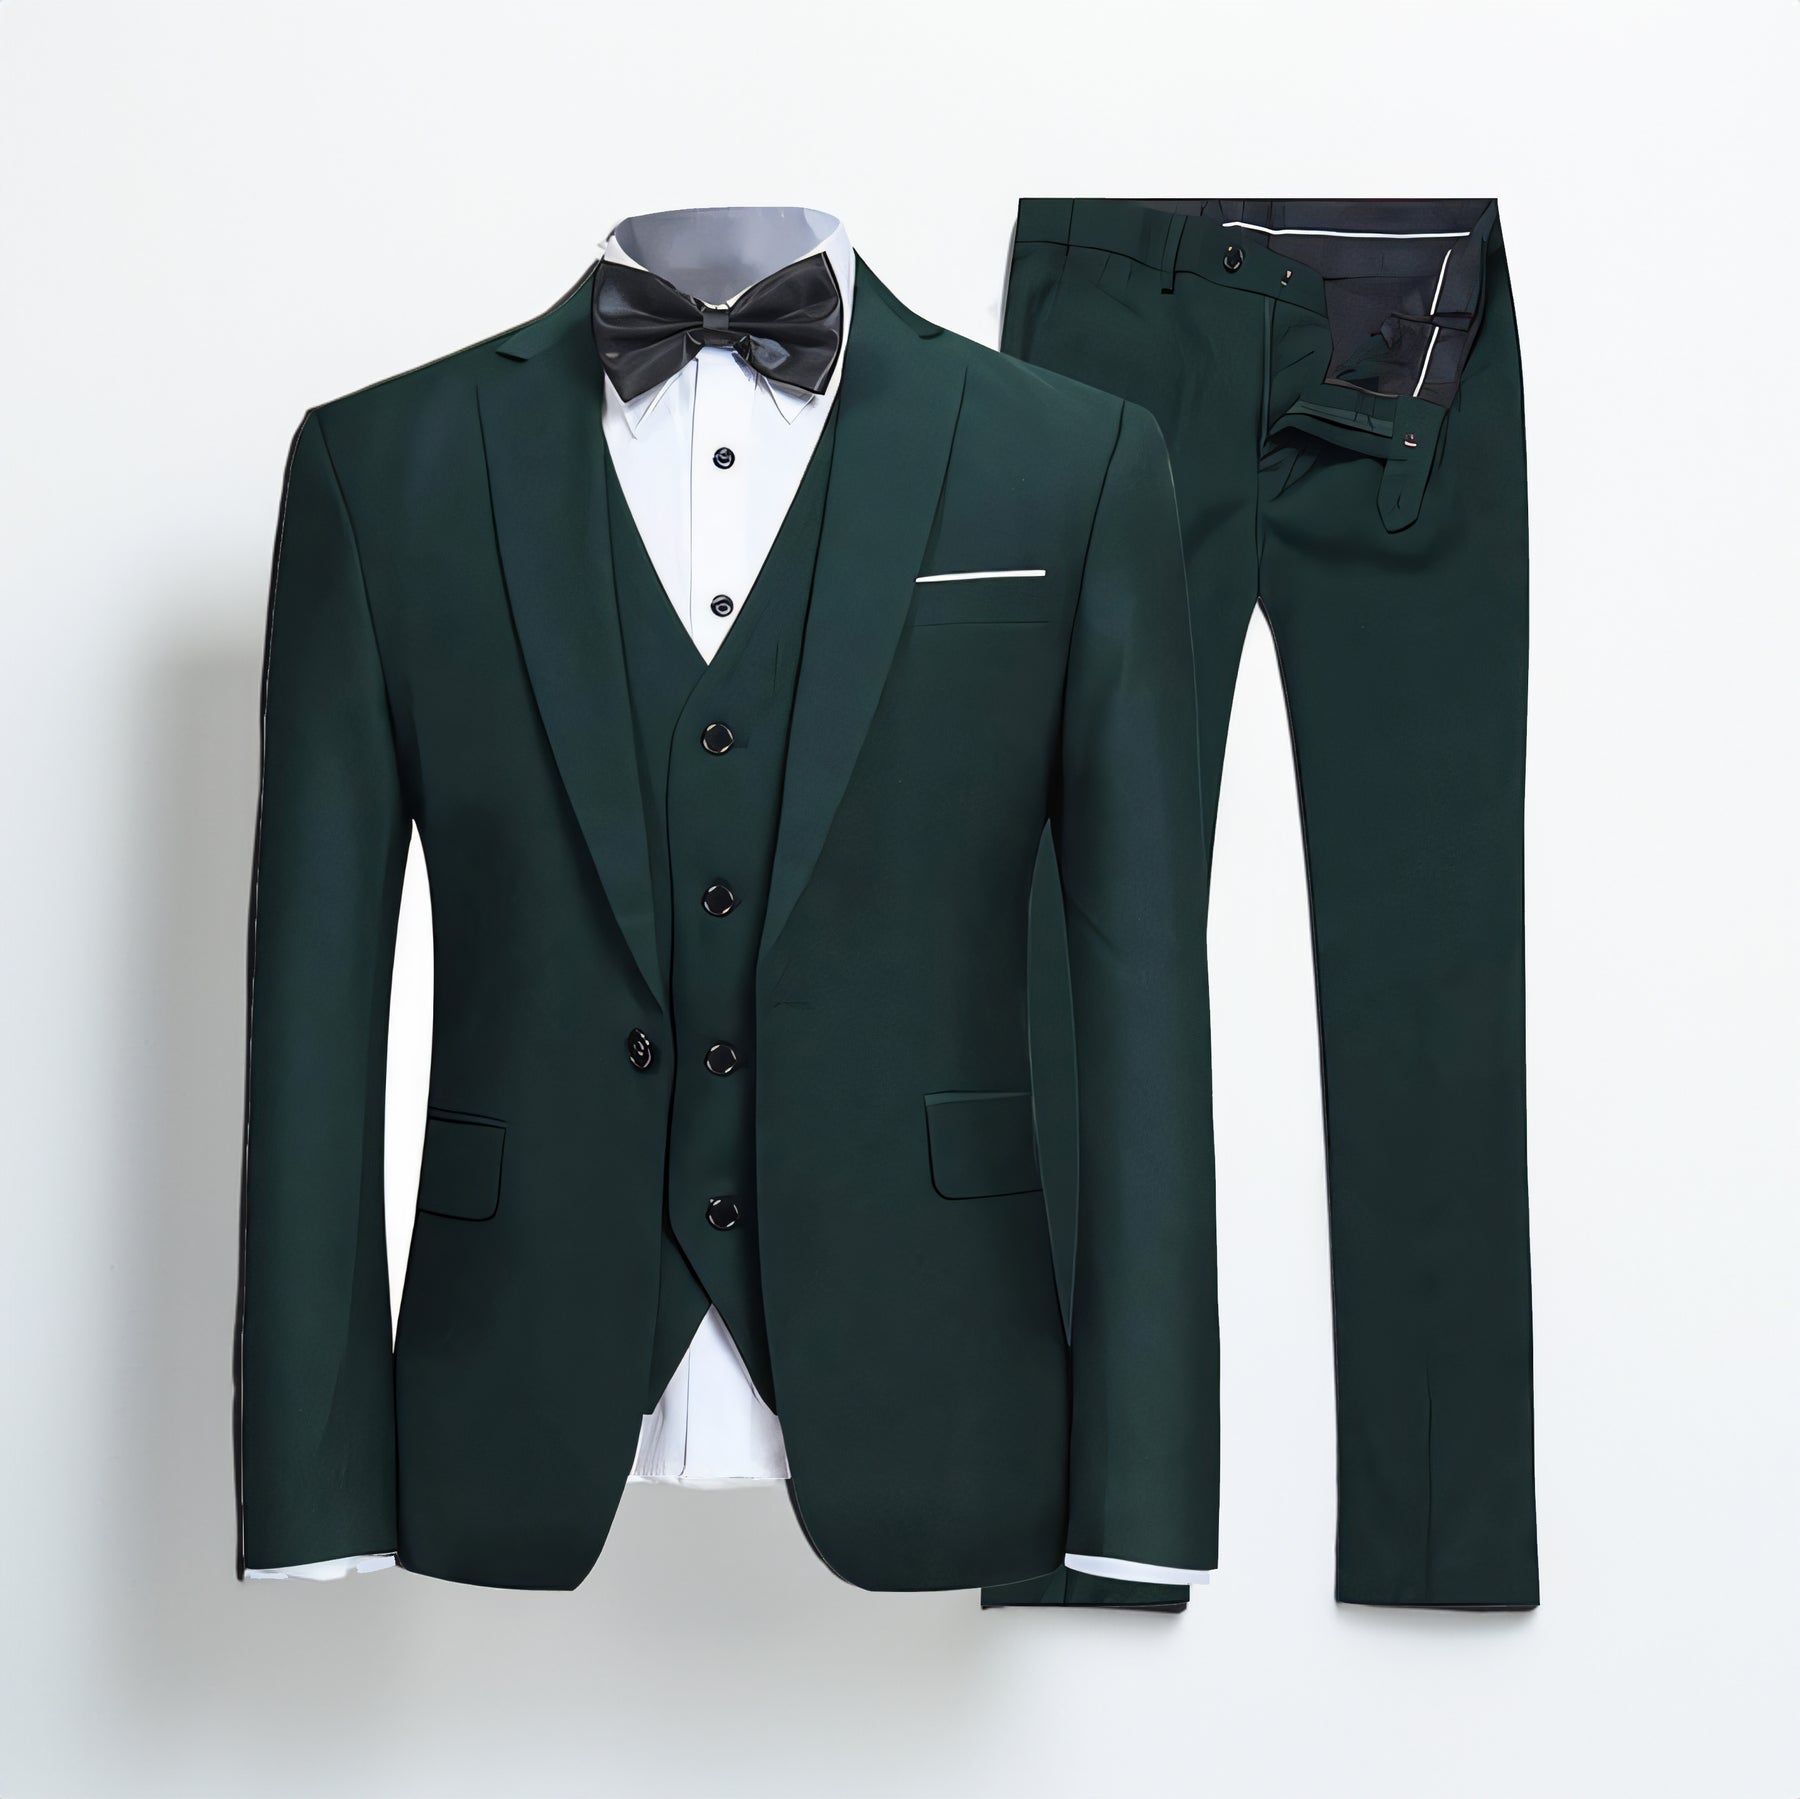 Men‘s 3 Piece Hunt Green Suits Slim Fit One Button Peak Lapel Solid Tuxedos